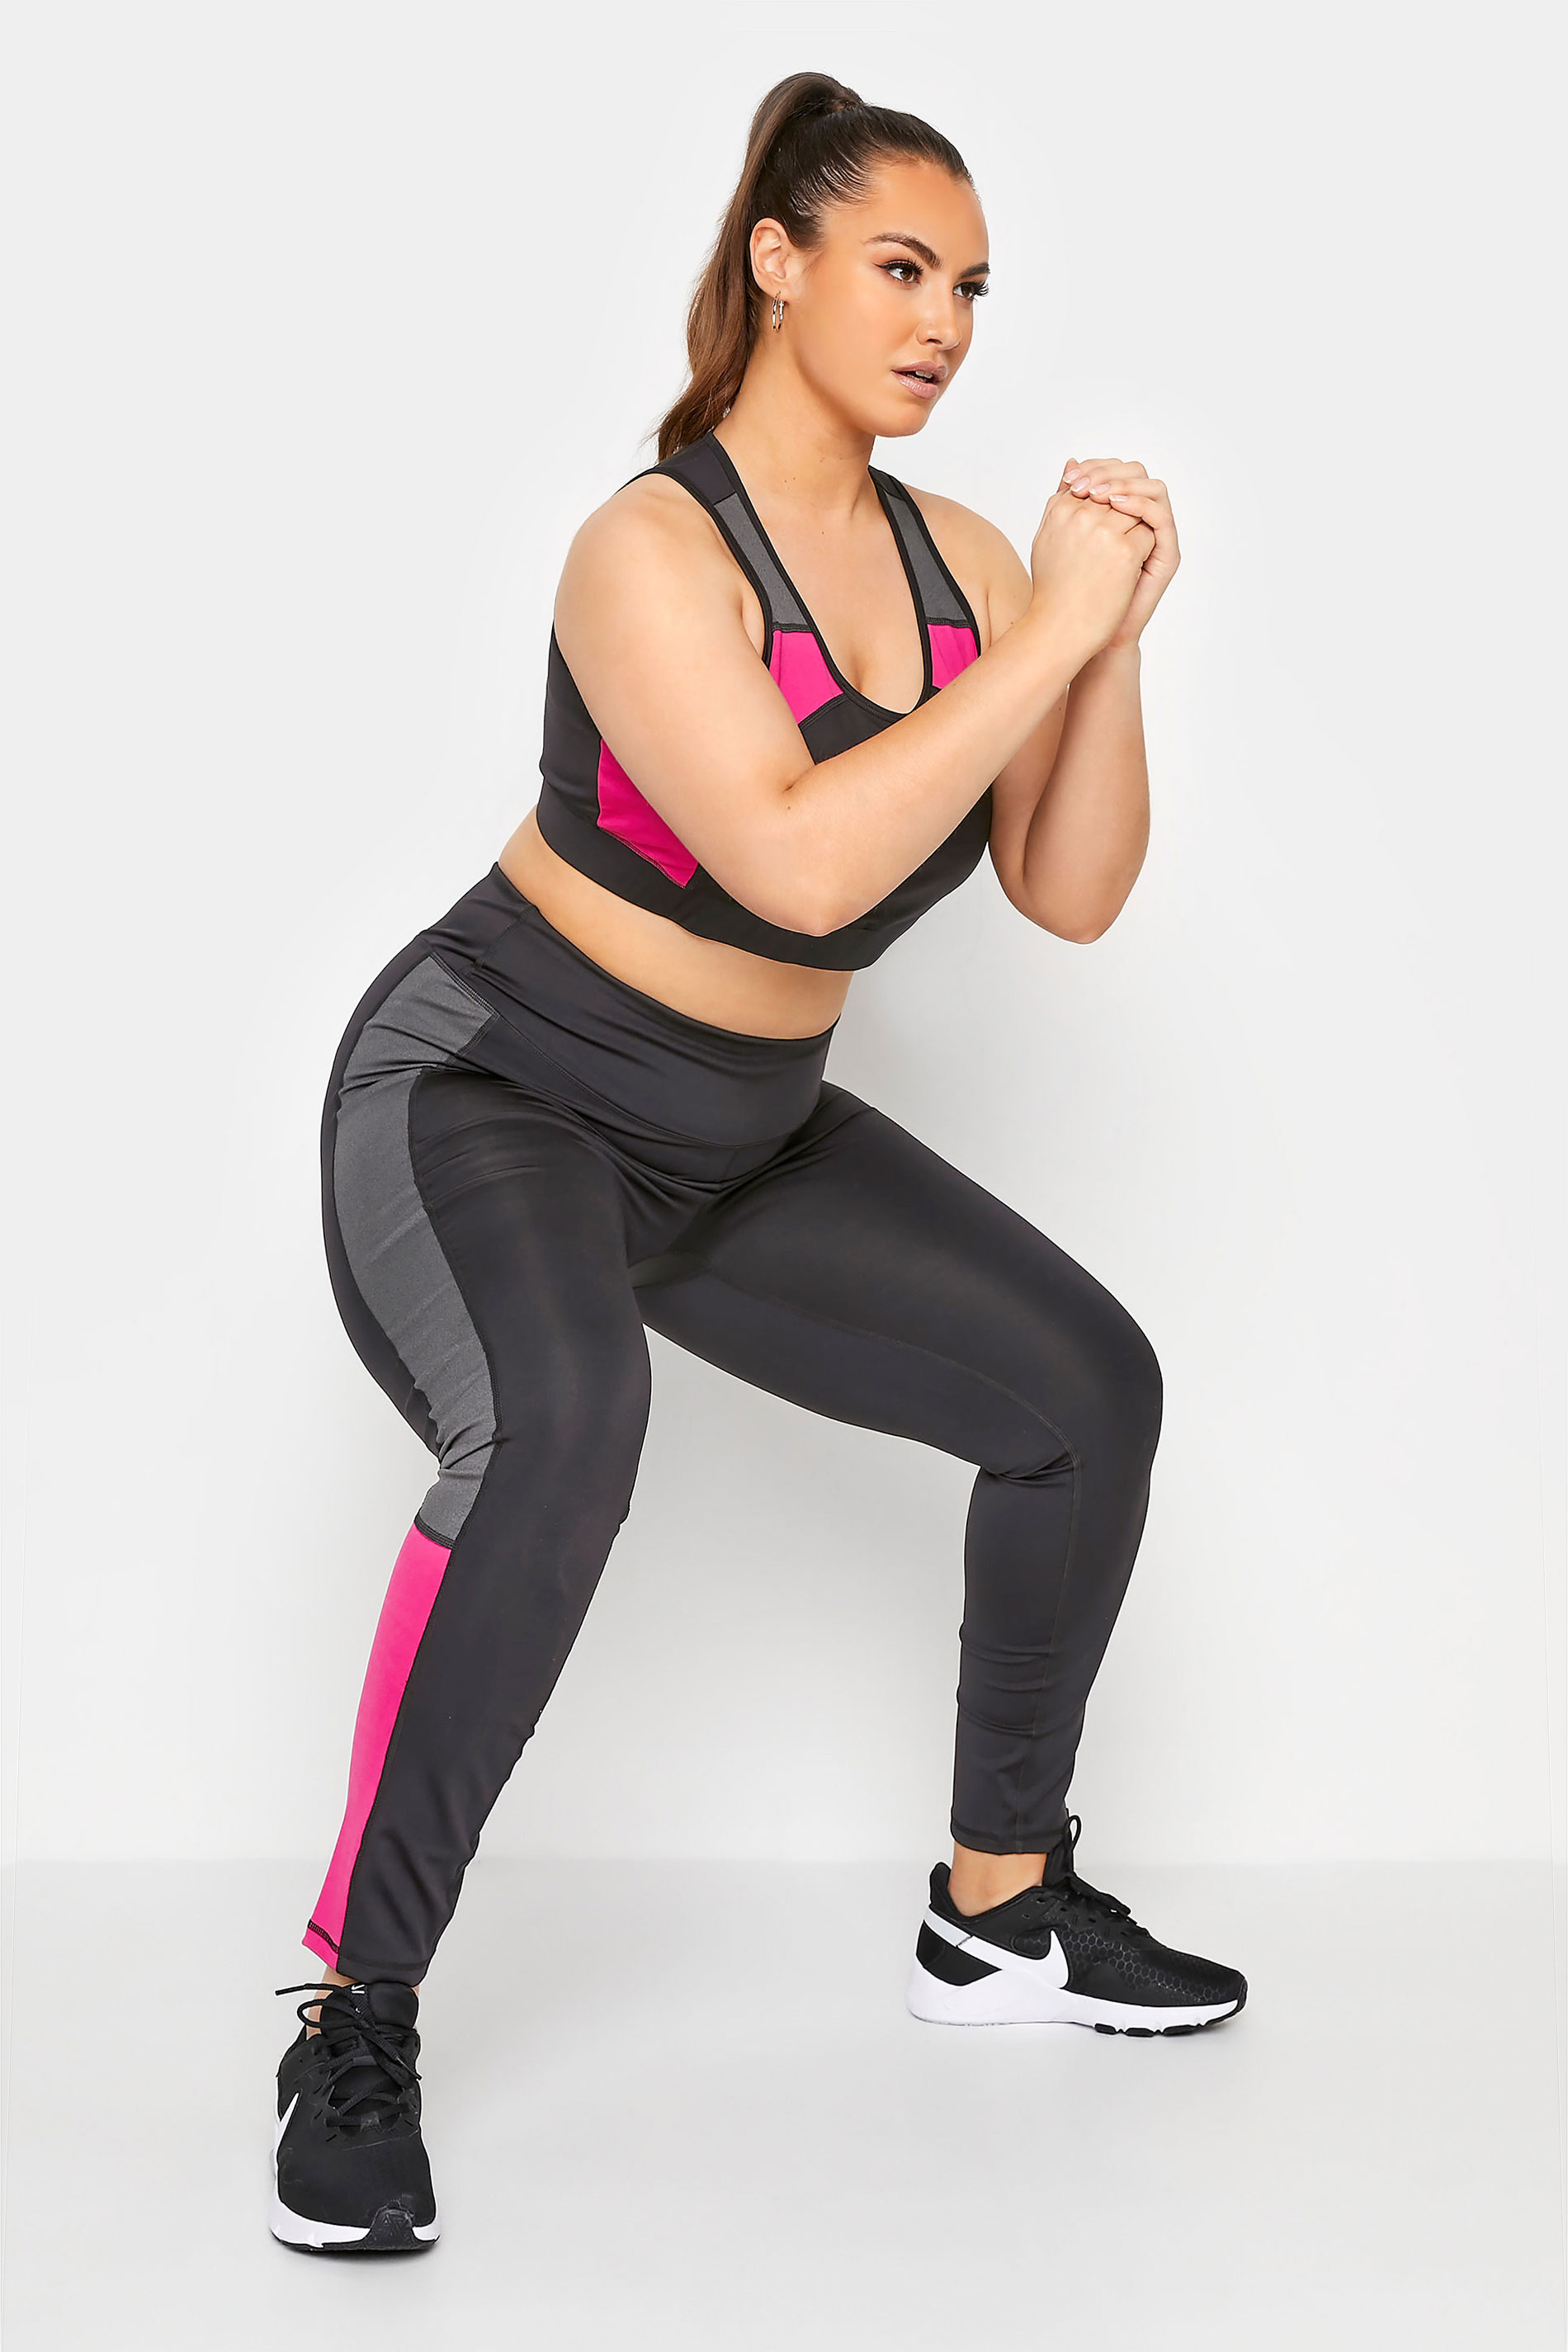 Spyder Ladies Performance Yoga High Rise Side Pockets Tight Leggings S Small